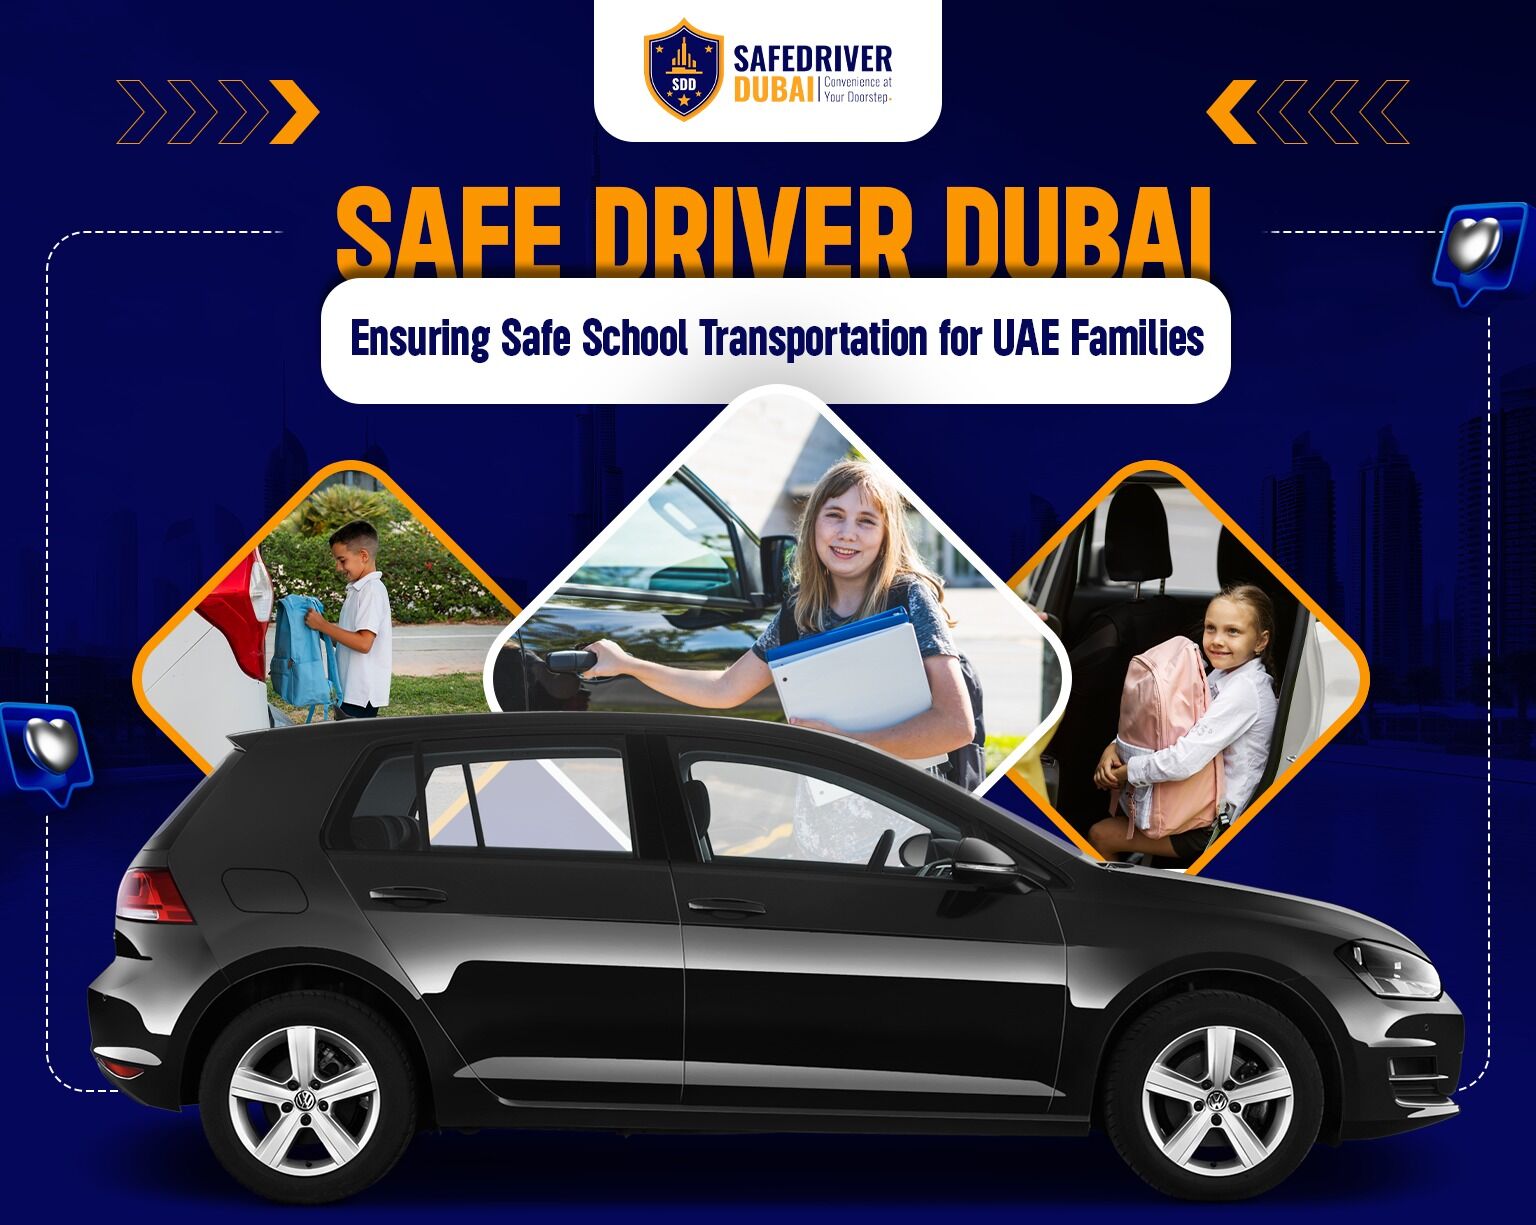 SafeDriver-Dubai-Ensuring-Safe-School-Transportation-for-UAE-Families